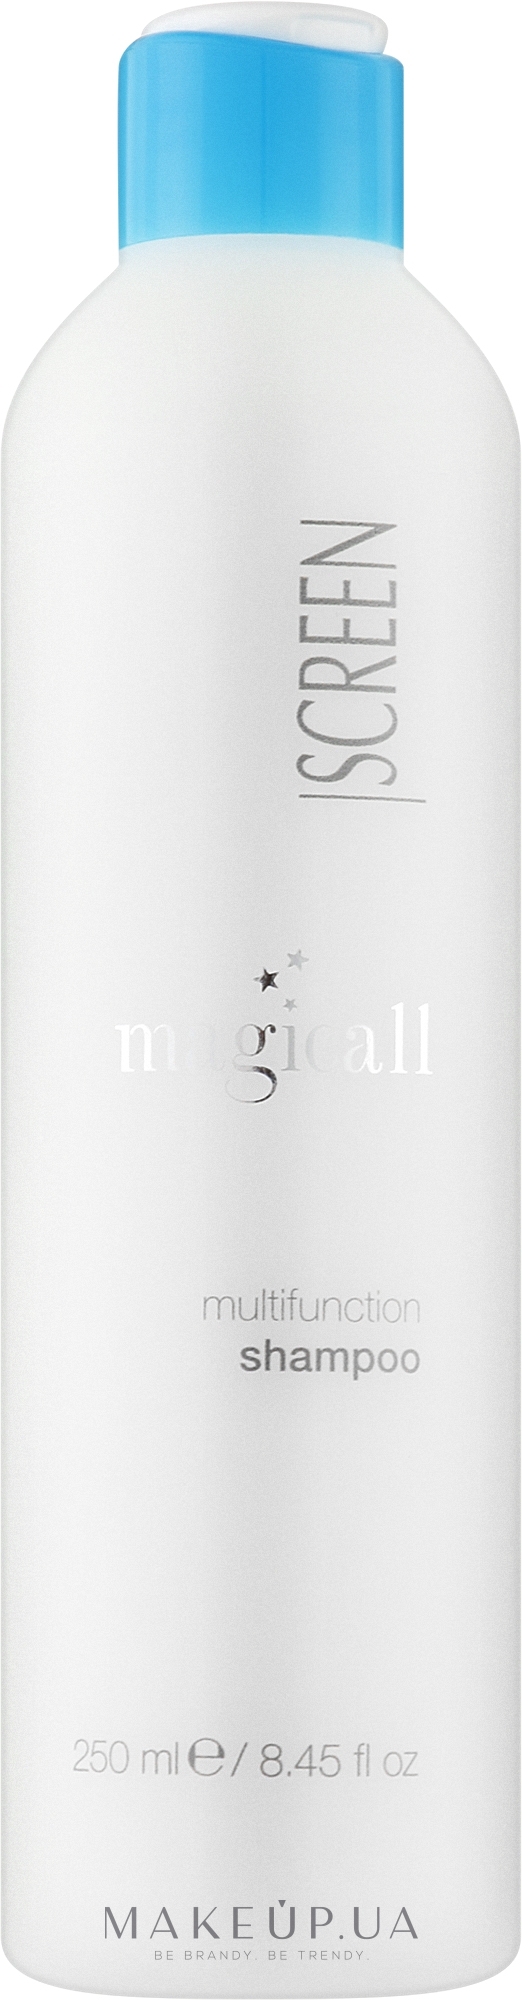 Багатофункціональний шампунь для волосся - Screen Magicall Multifunction Shampoo — фото 250ml